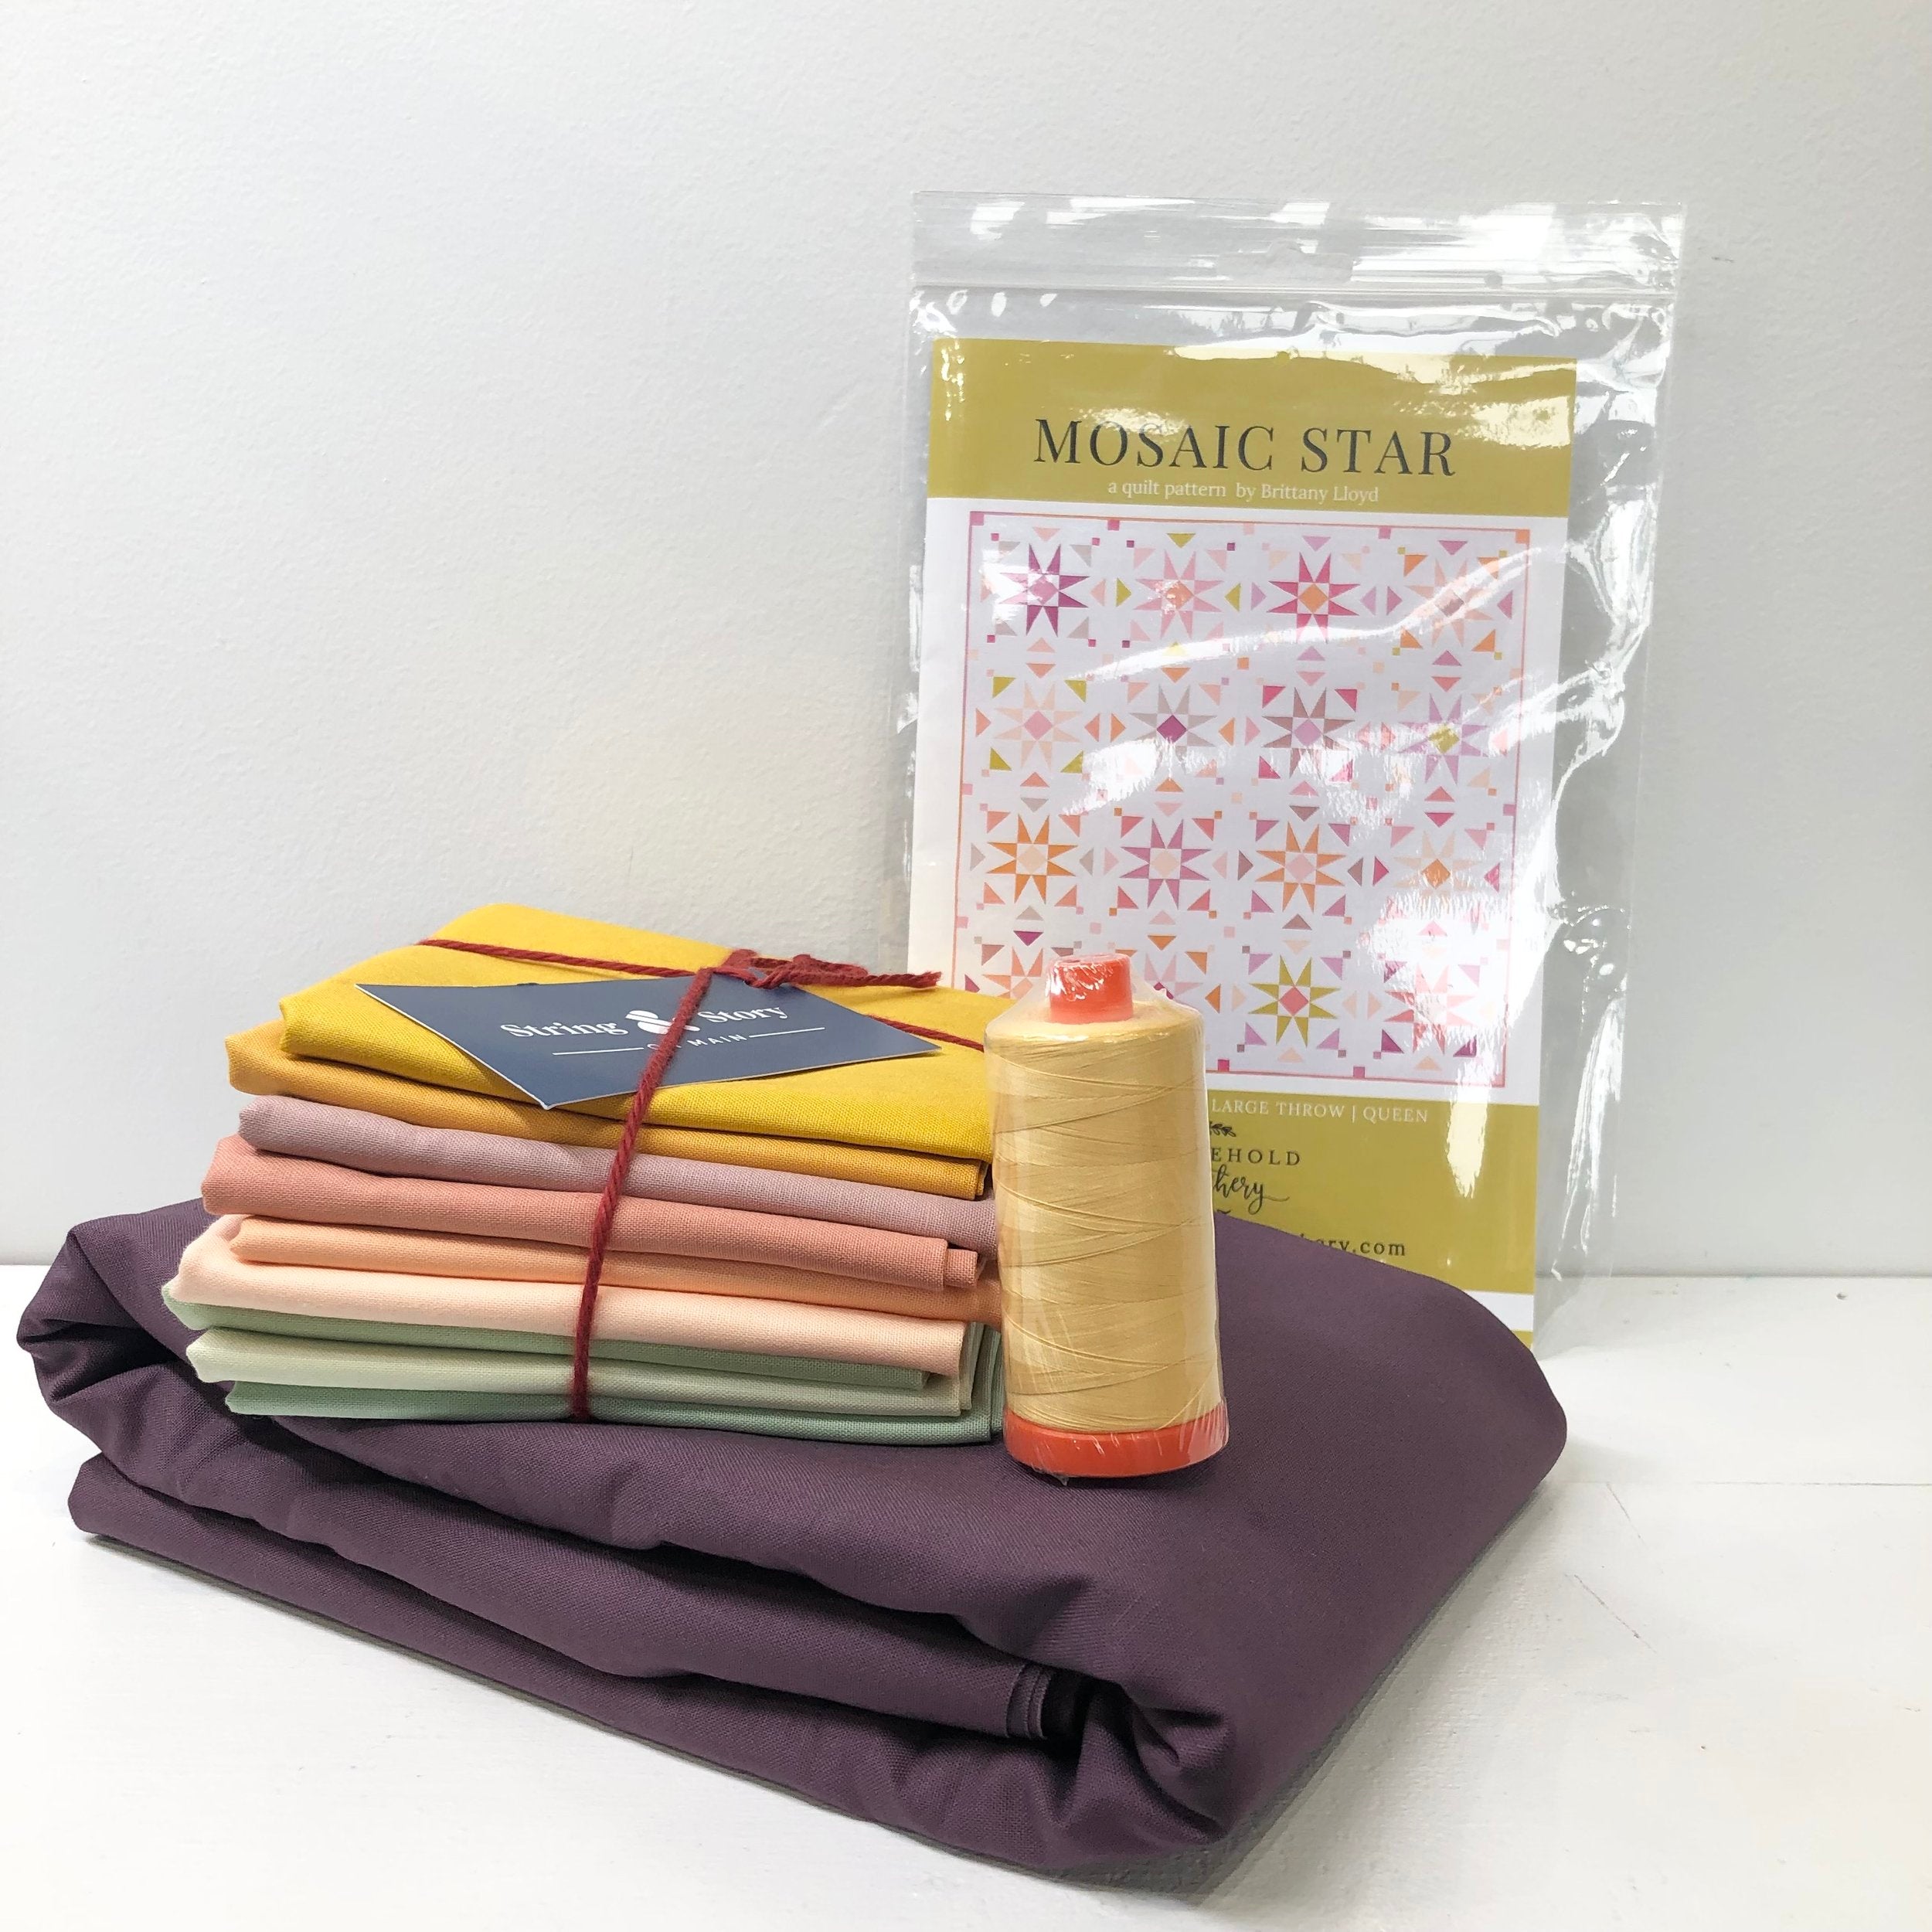 Kit: Mosaic Star Quilt Kit- Crib Size